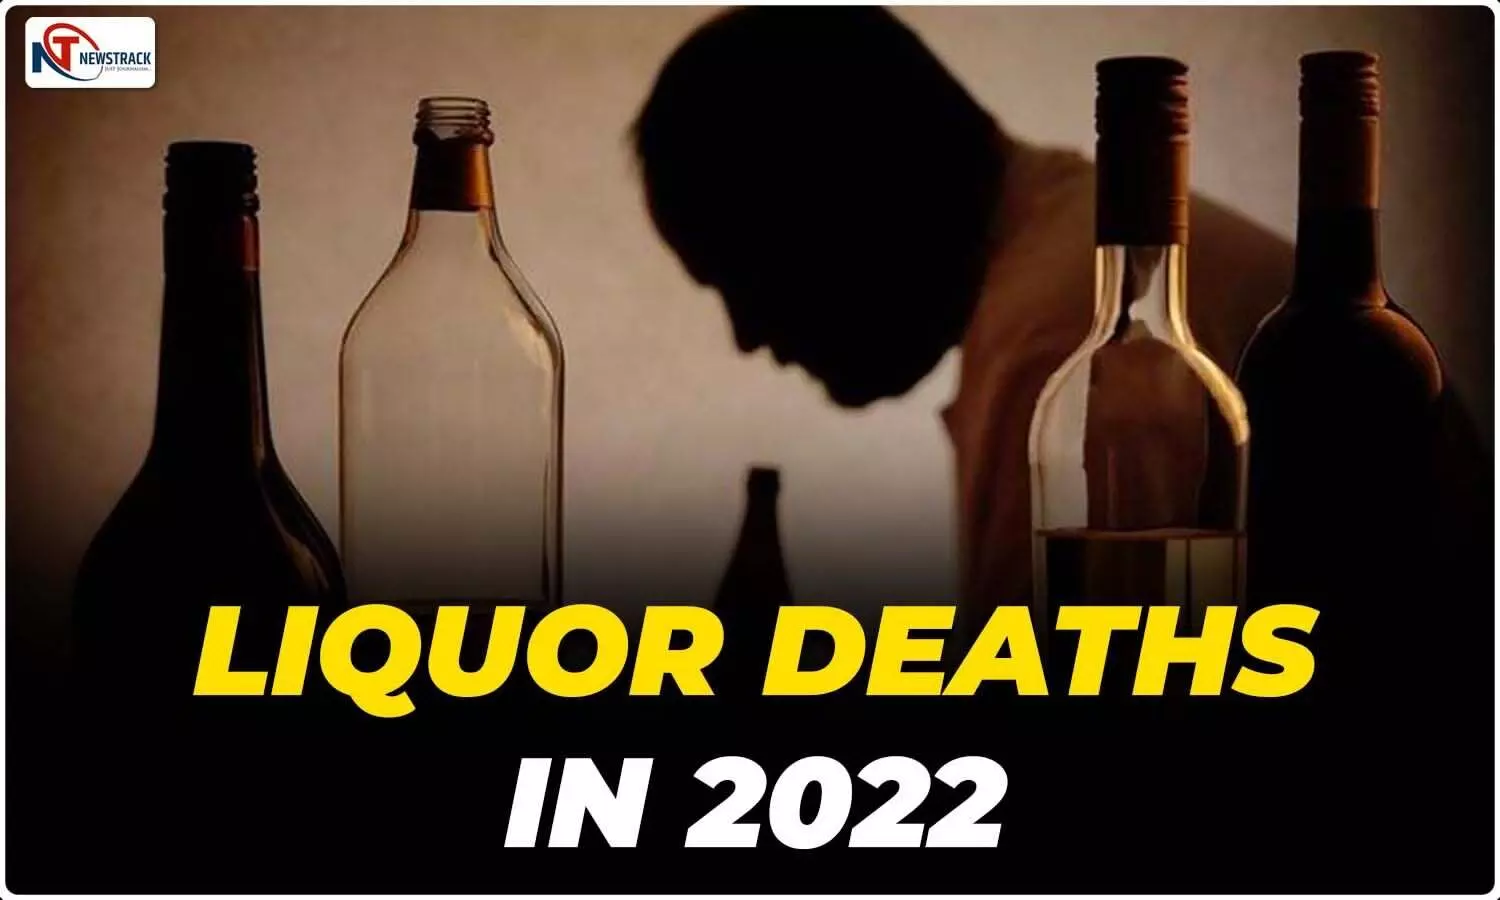 Liquor Deaths in 2022